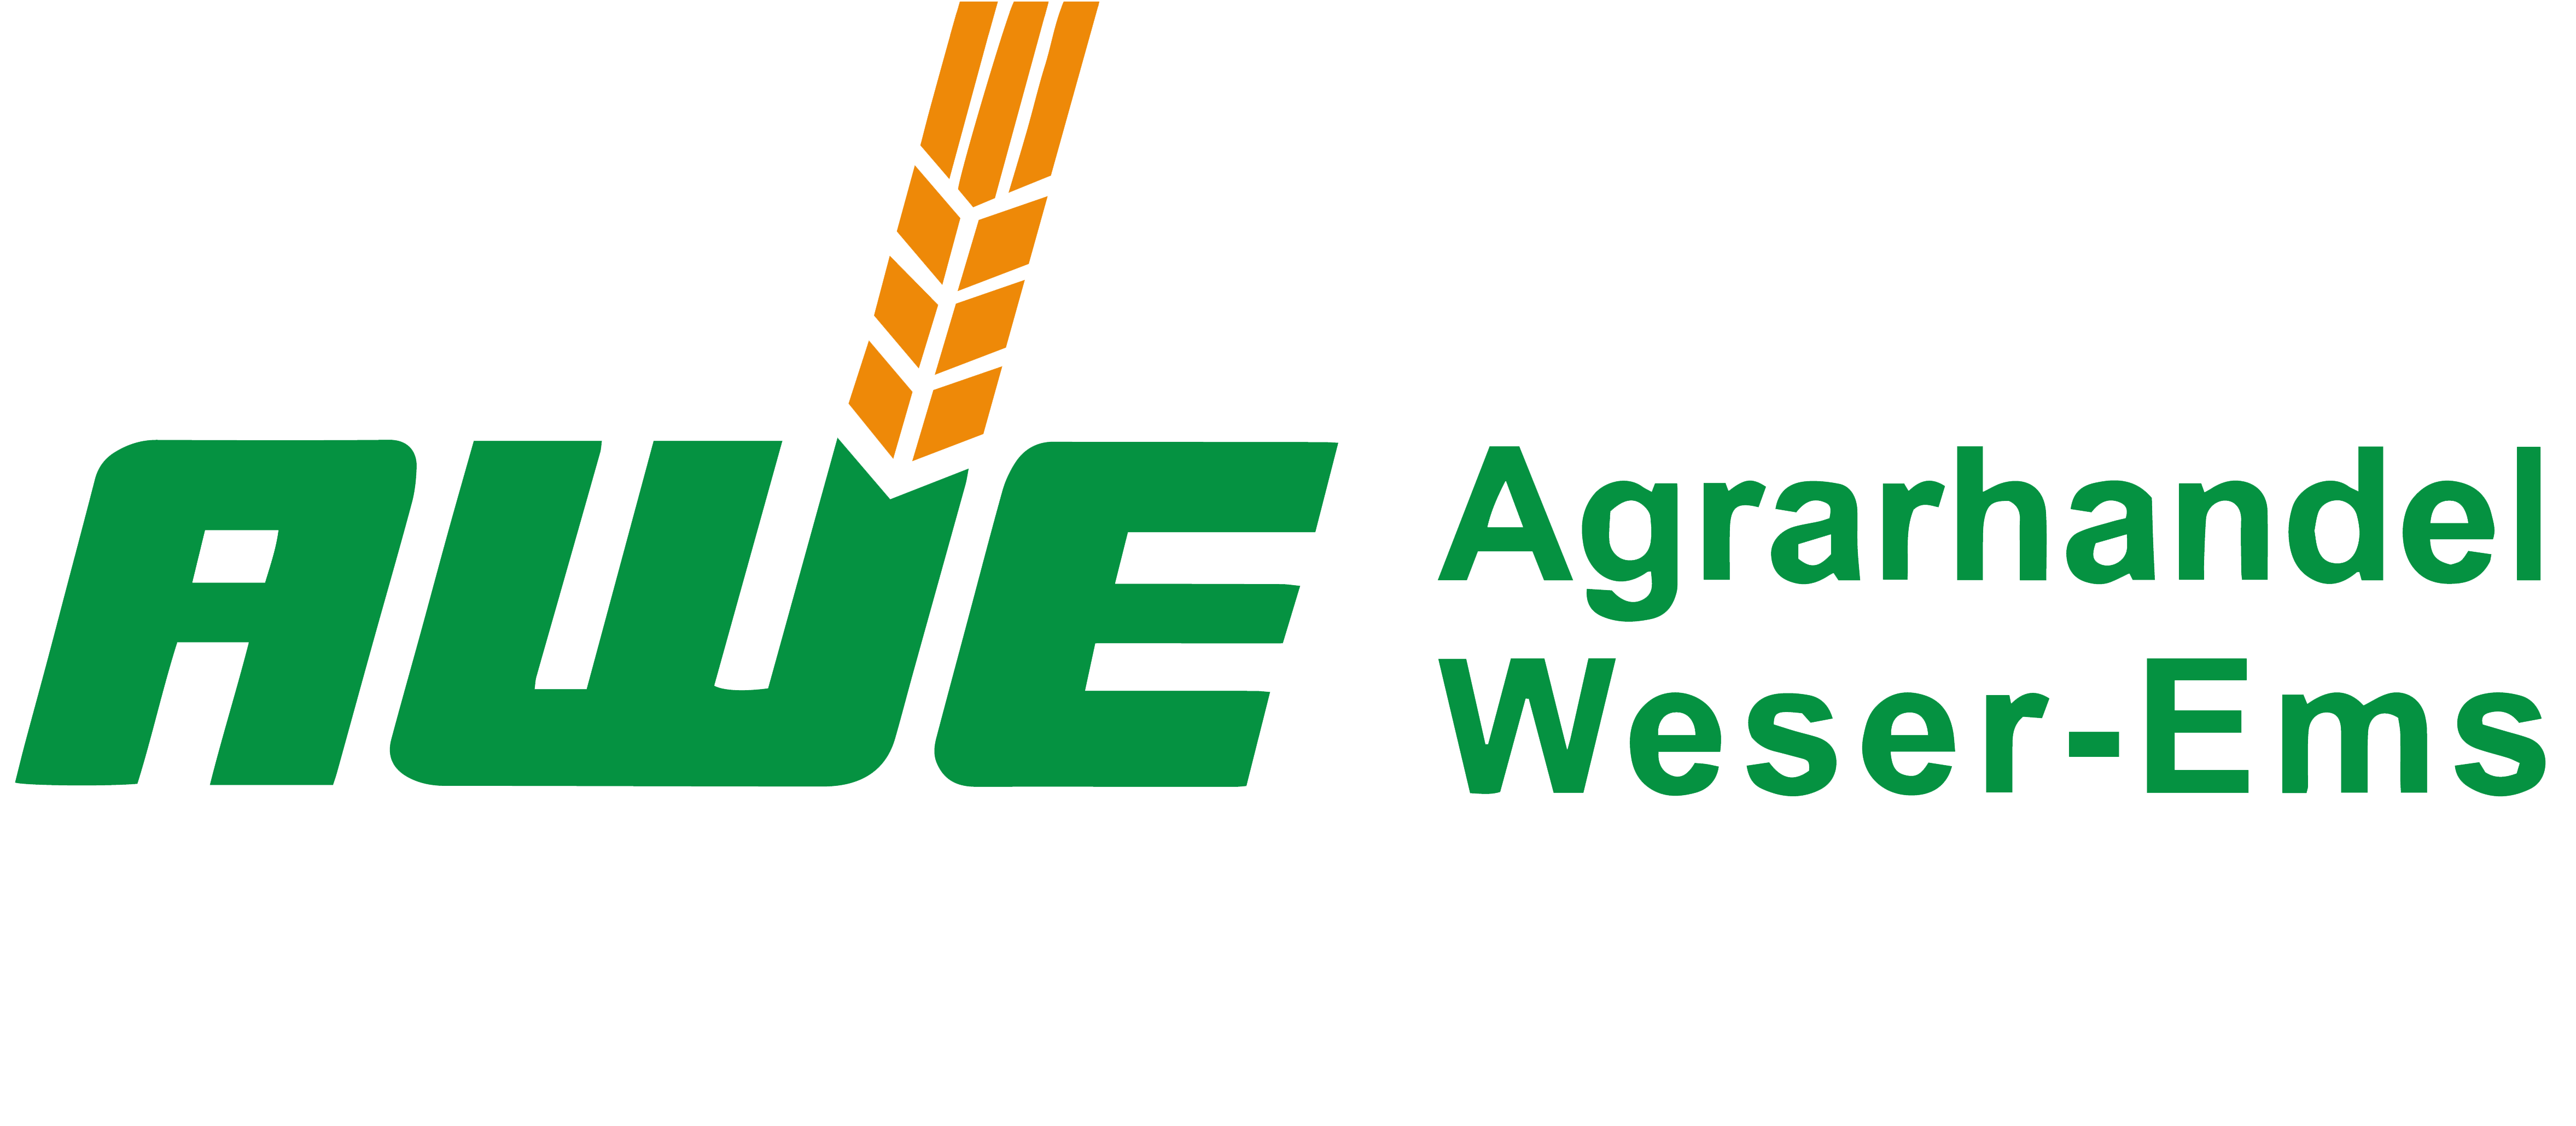 AWE-Agrarhandel Weser-Ems